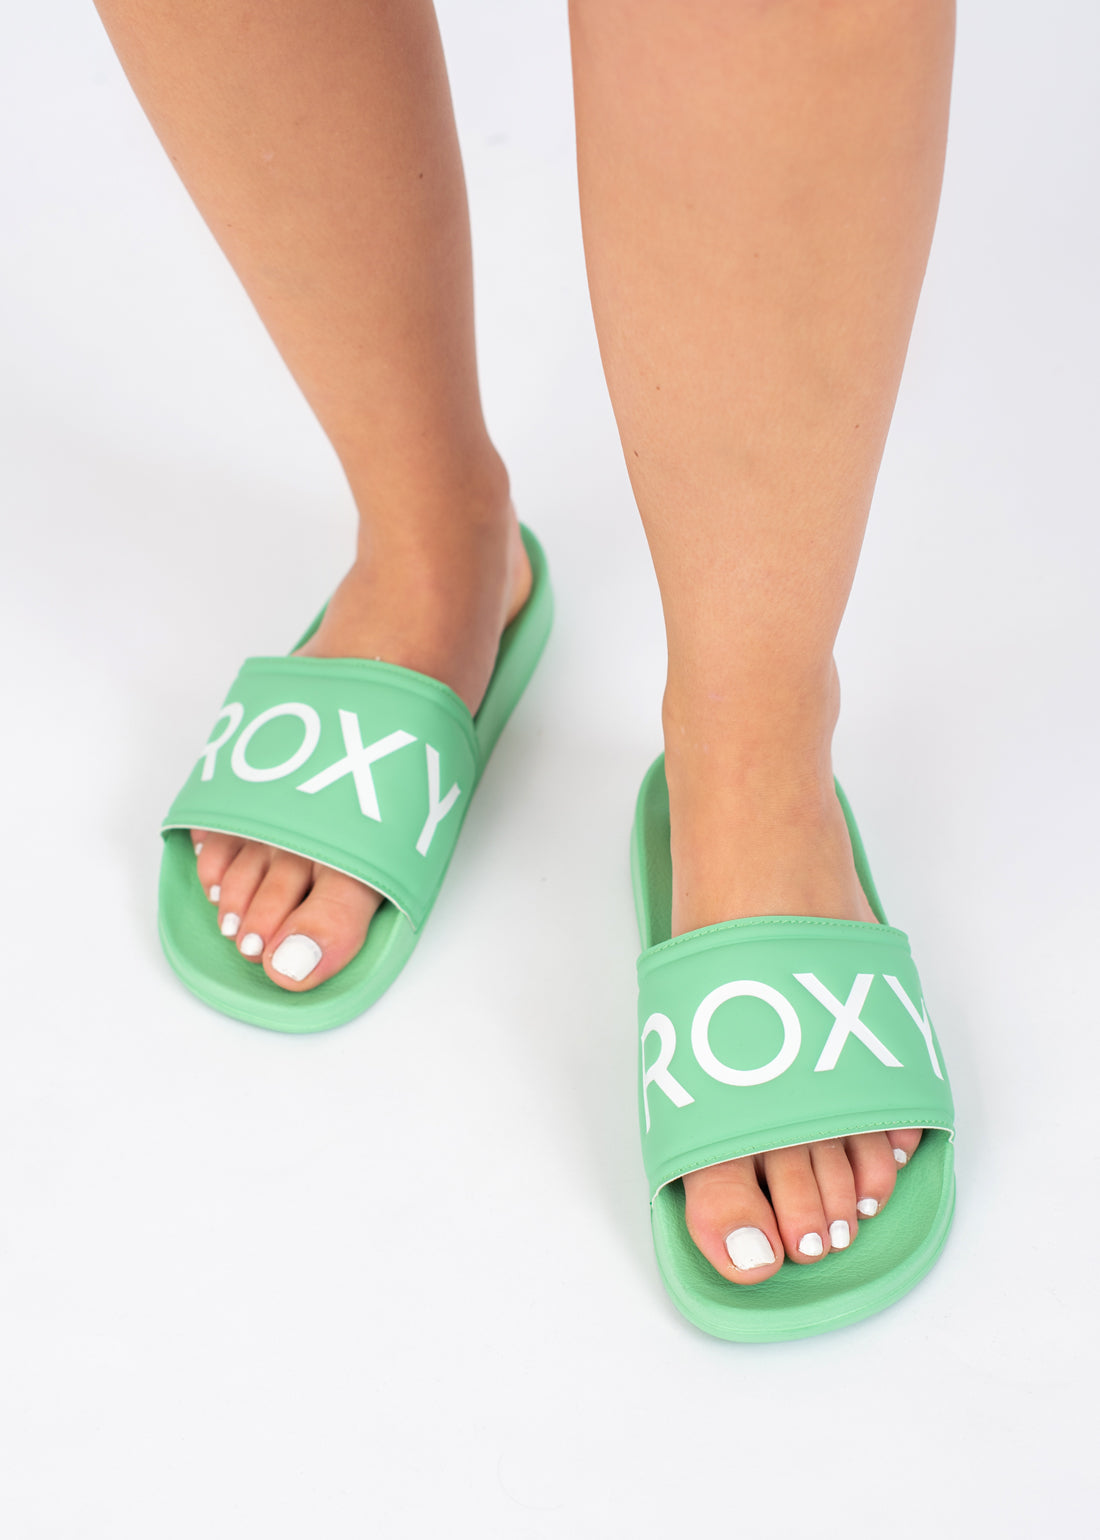 Slippy Slider Sandals in Aqua Green by Roxy